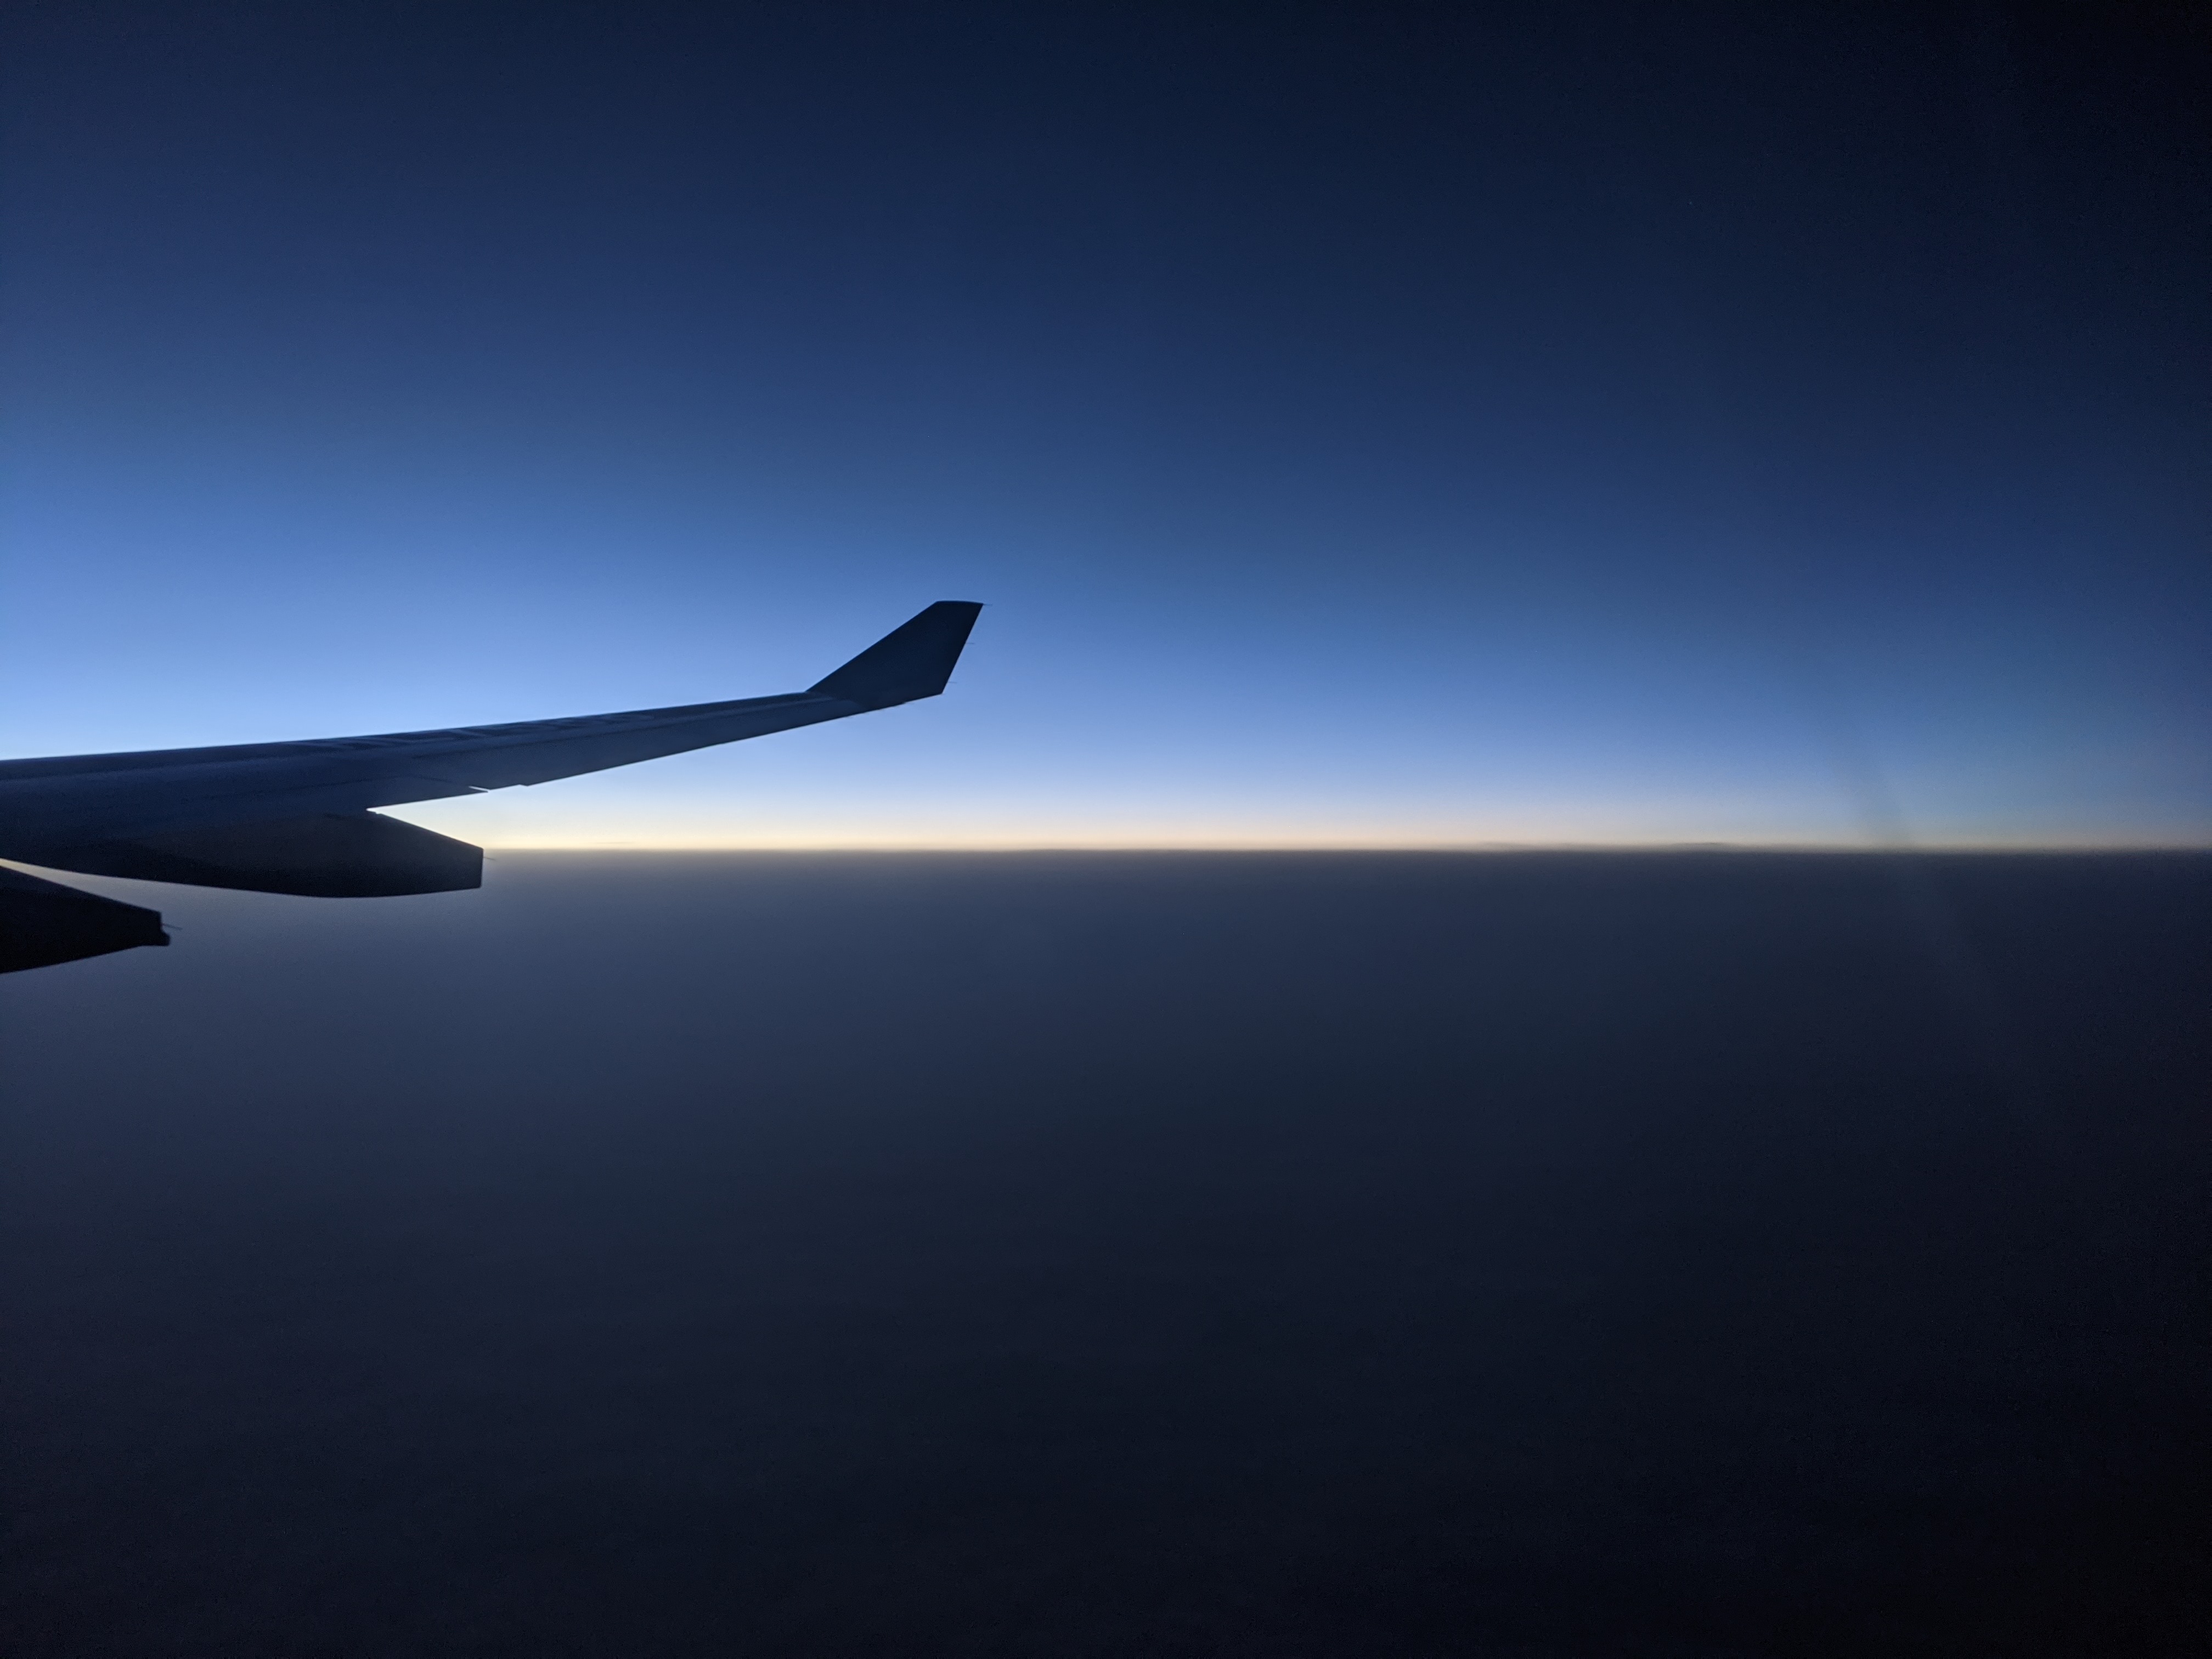 Daybreak on a plane